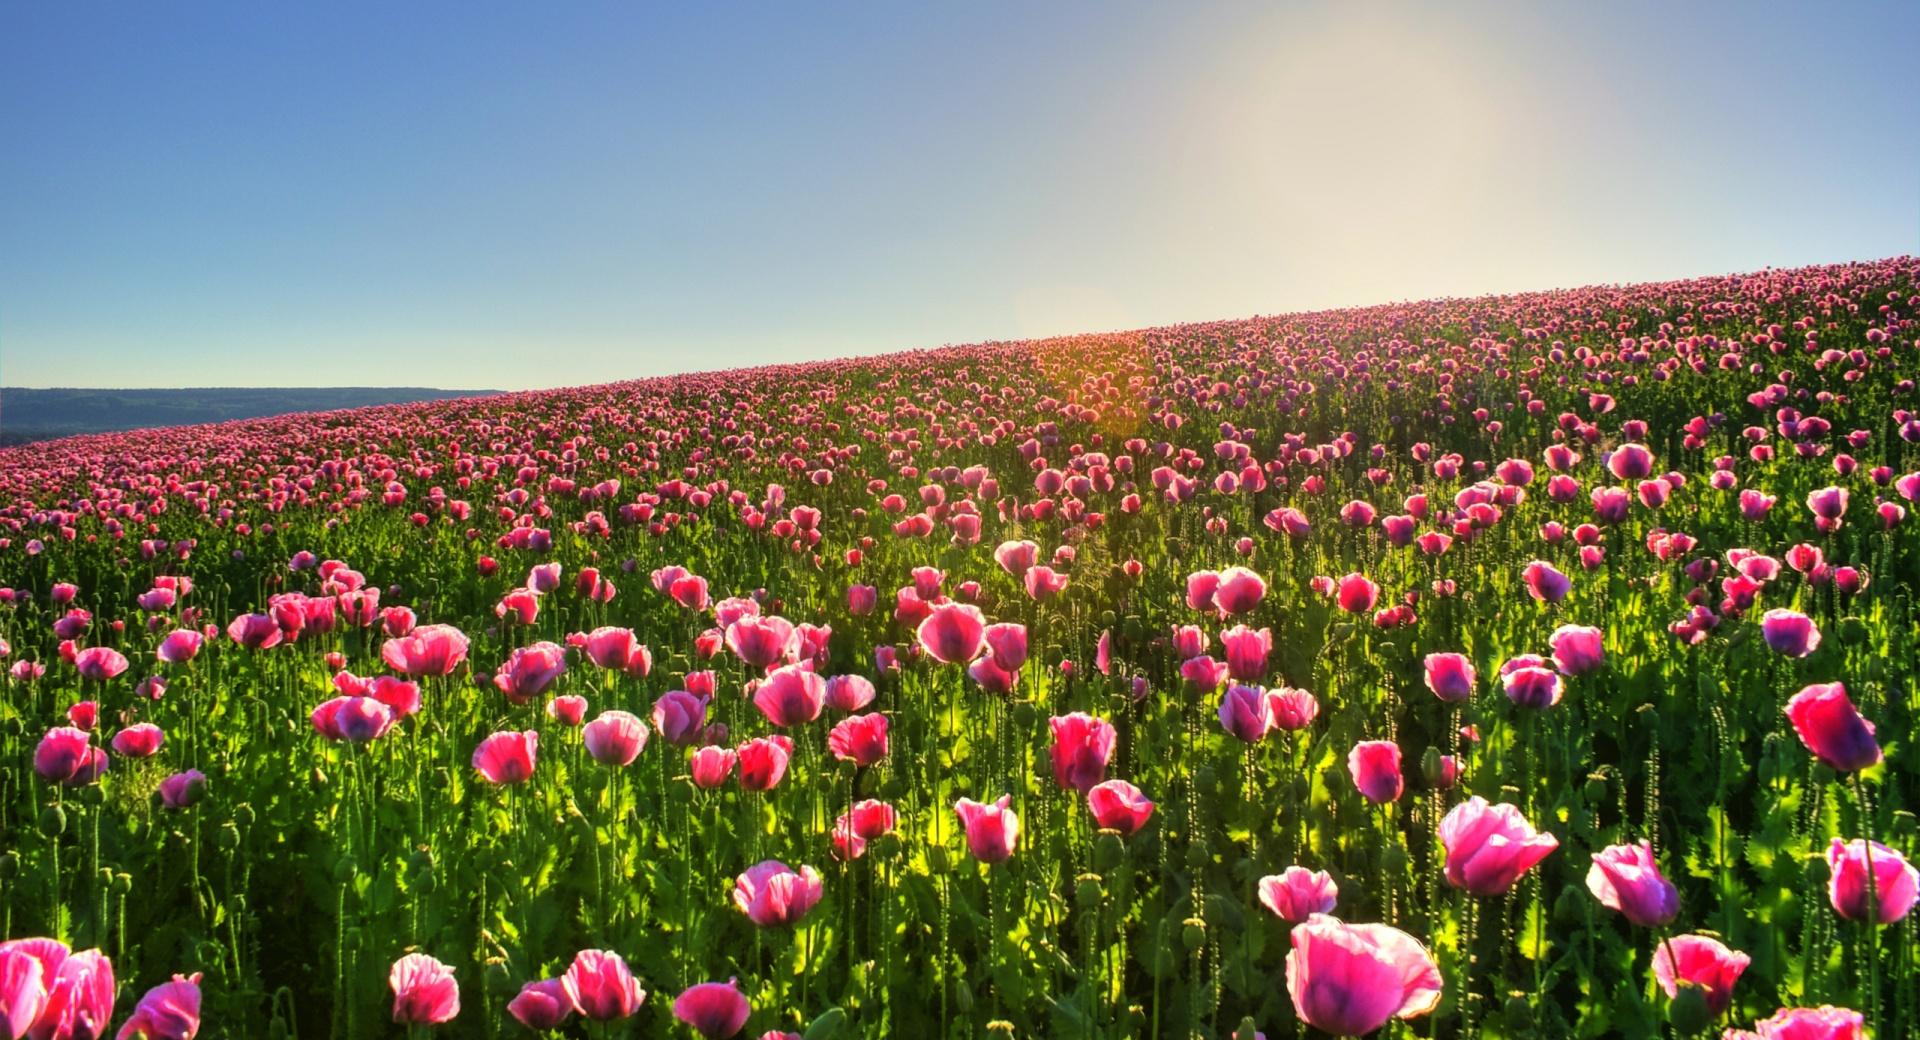 Beautiful Flower Field at 1024 x 1024 iPad size wallpapers HD quality